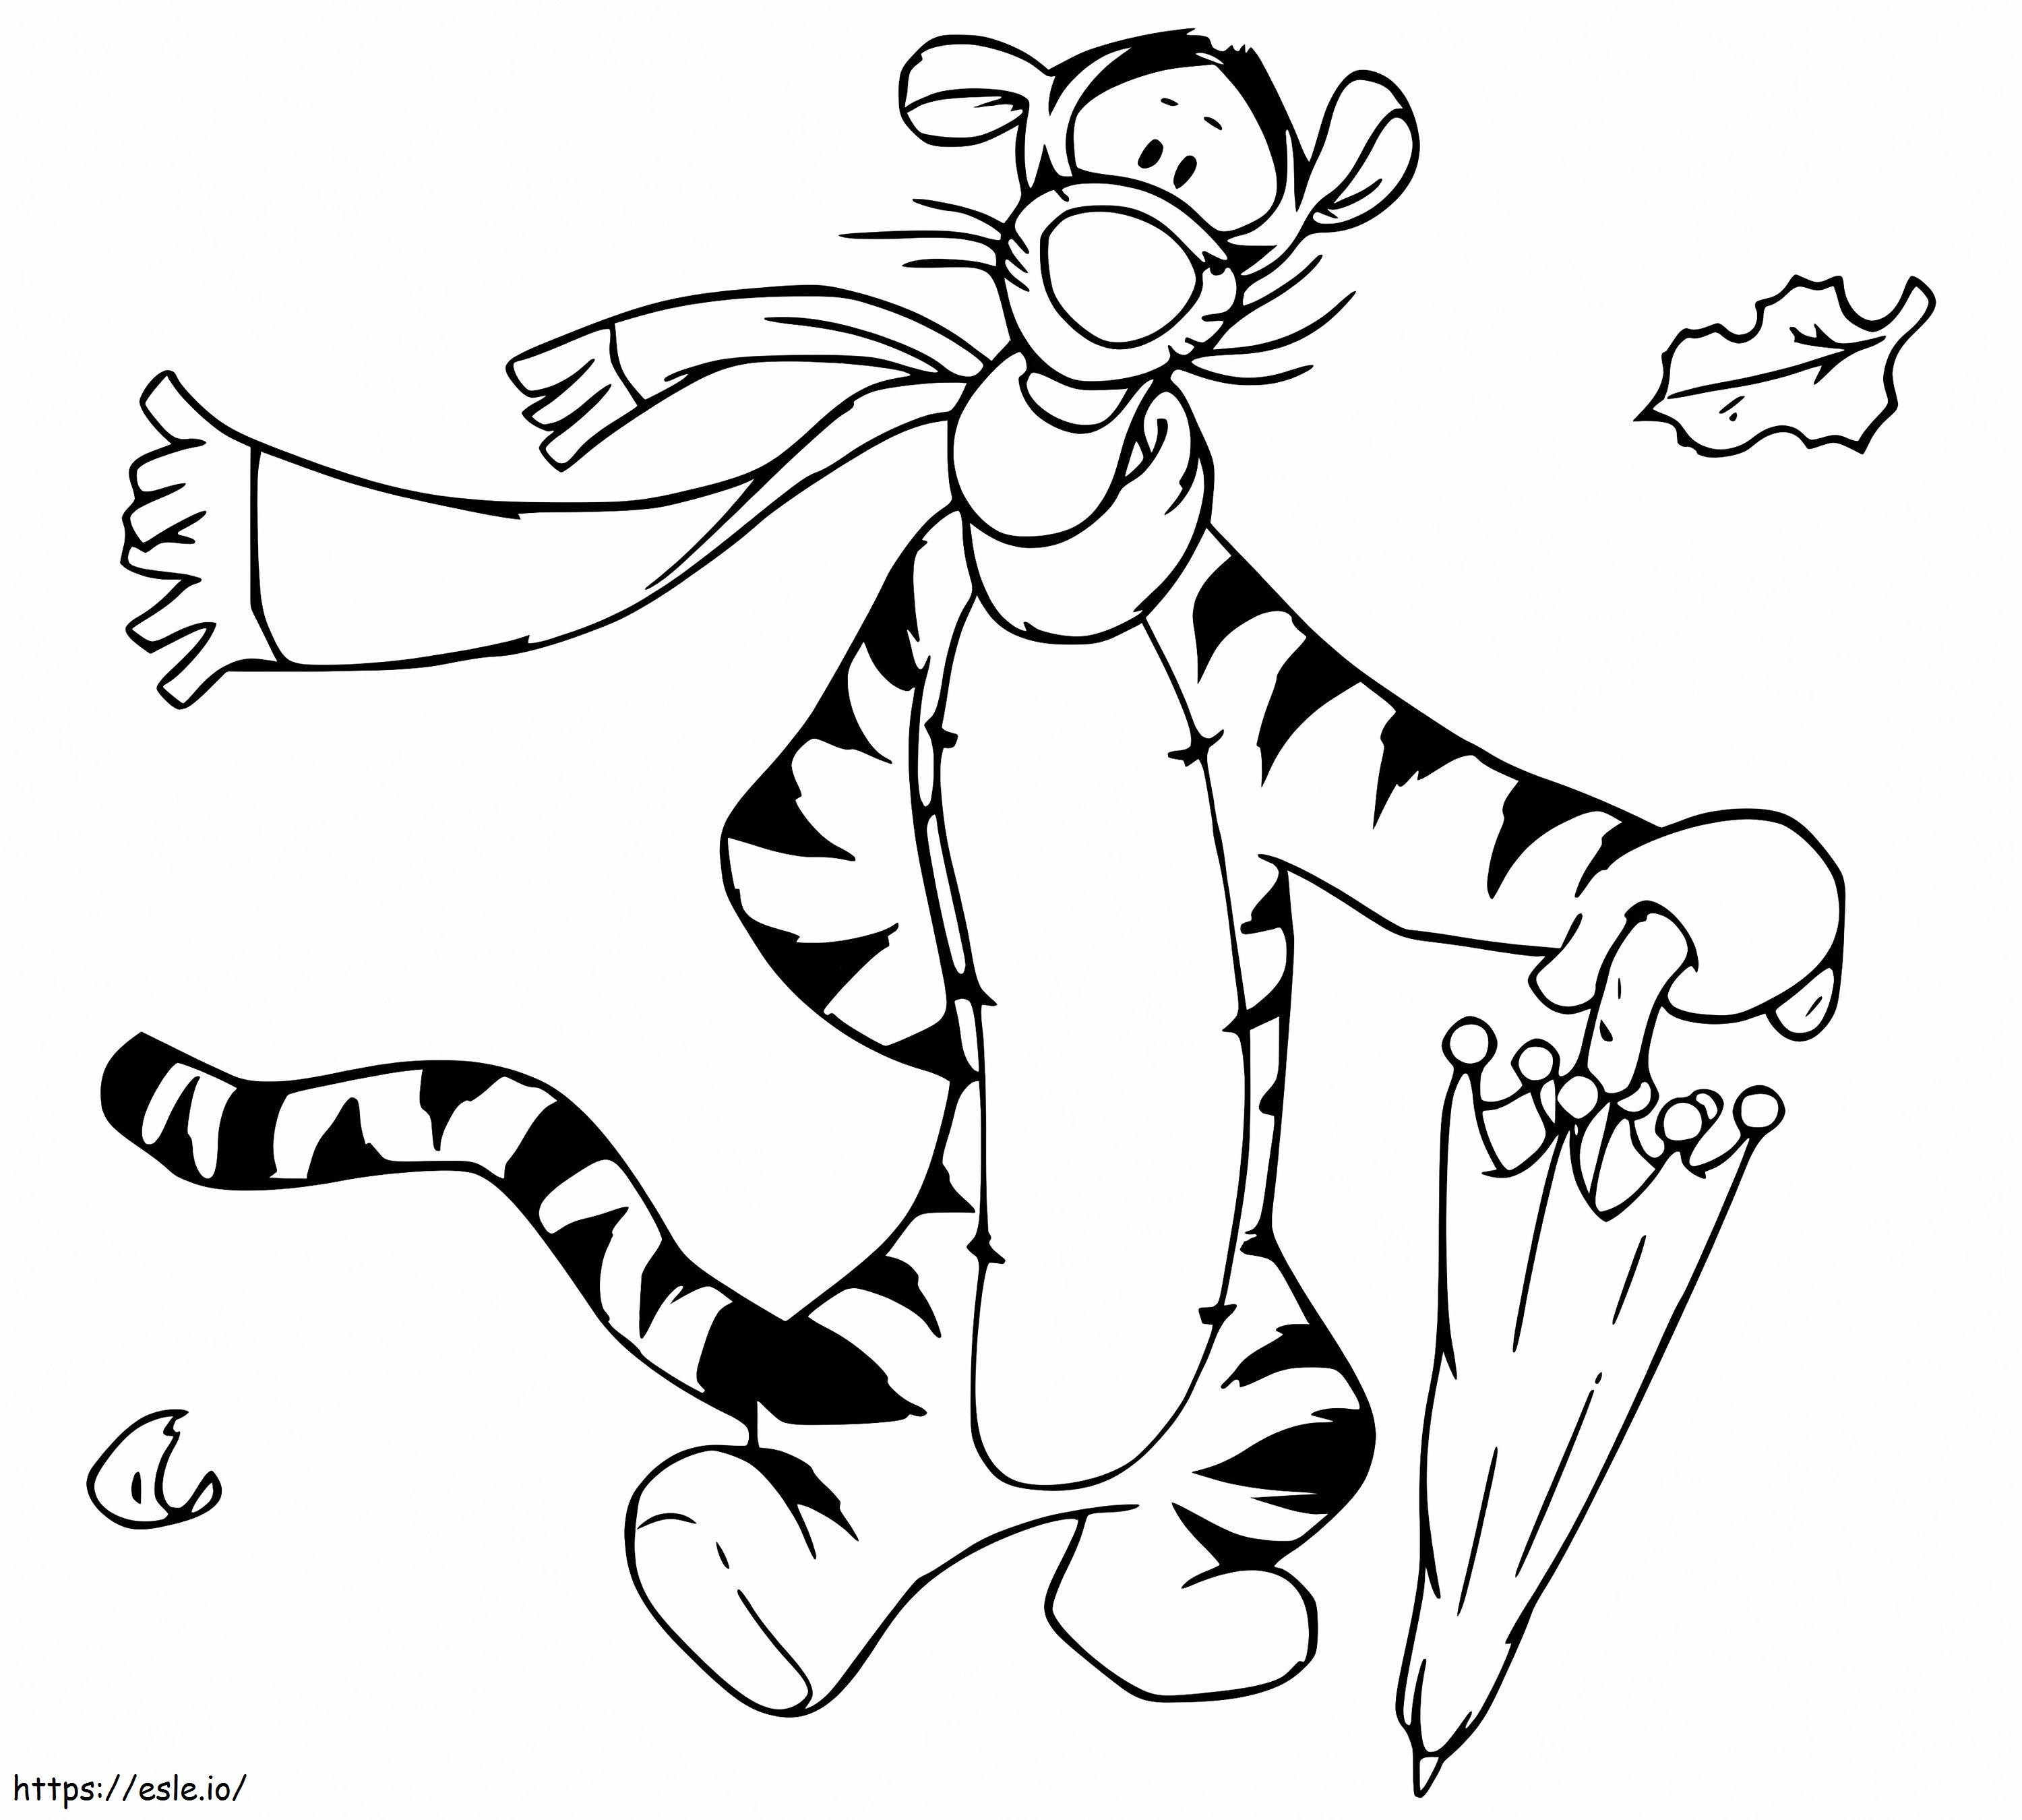 Tigre com guarda-chuva para colorir